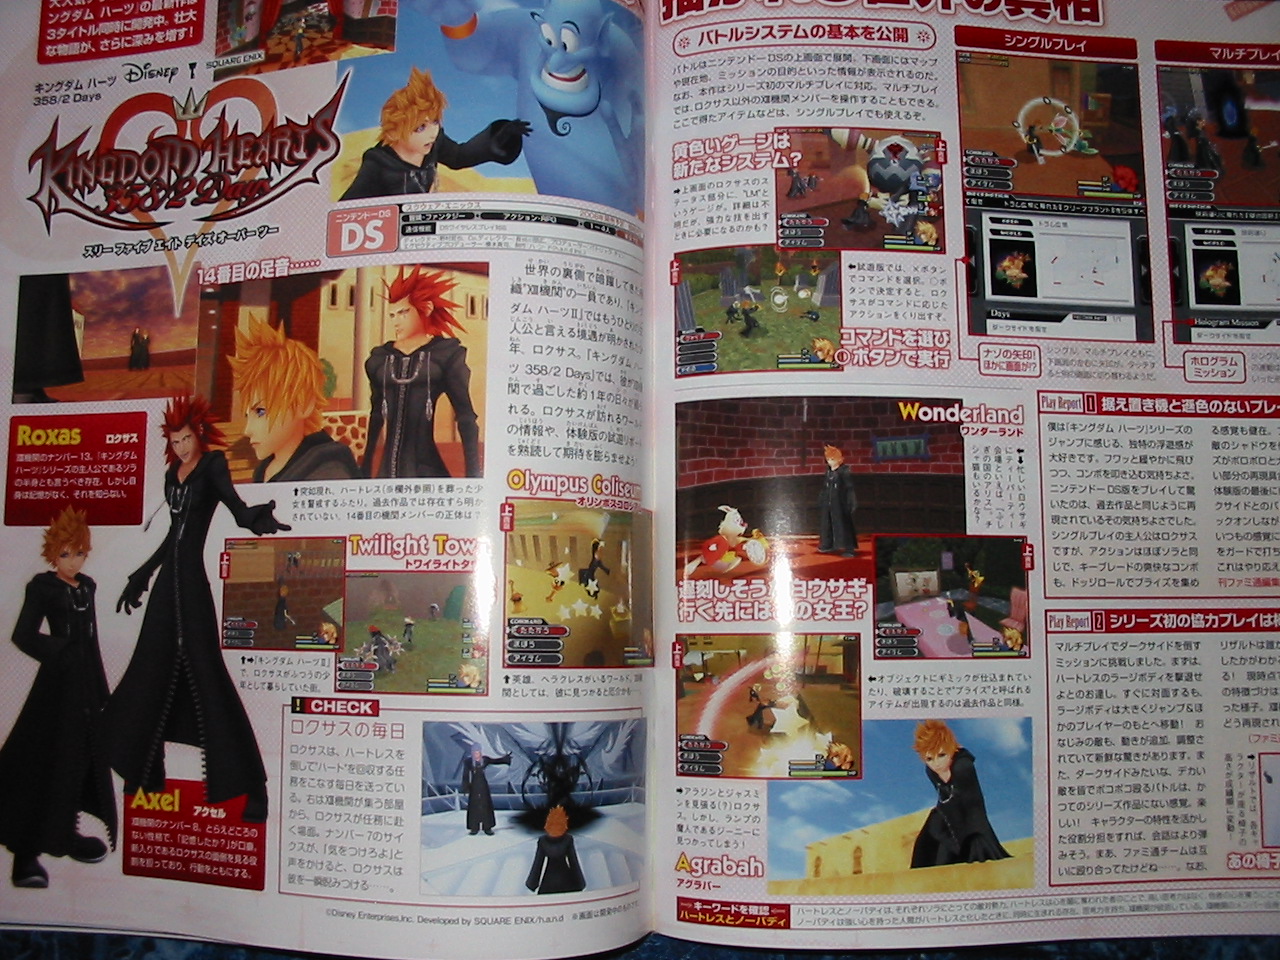 Kingdom Hearts 358/2 Days - Metacritic